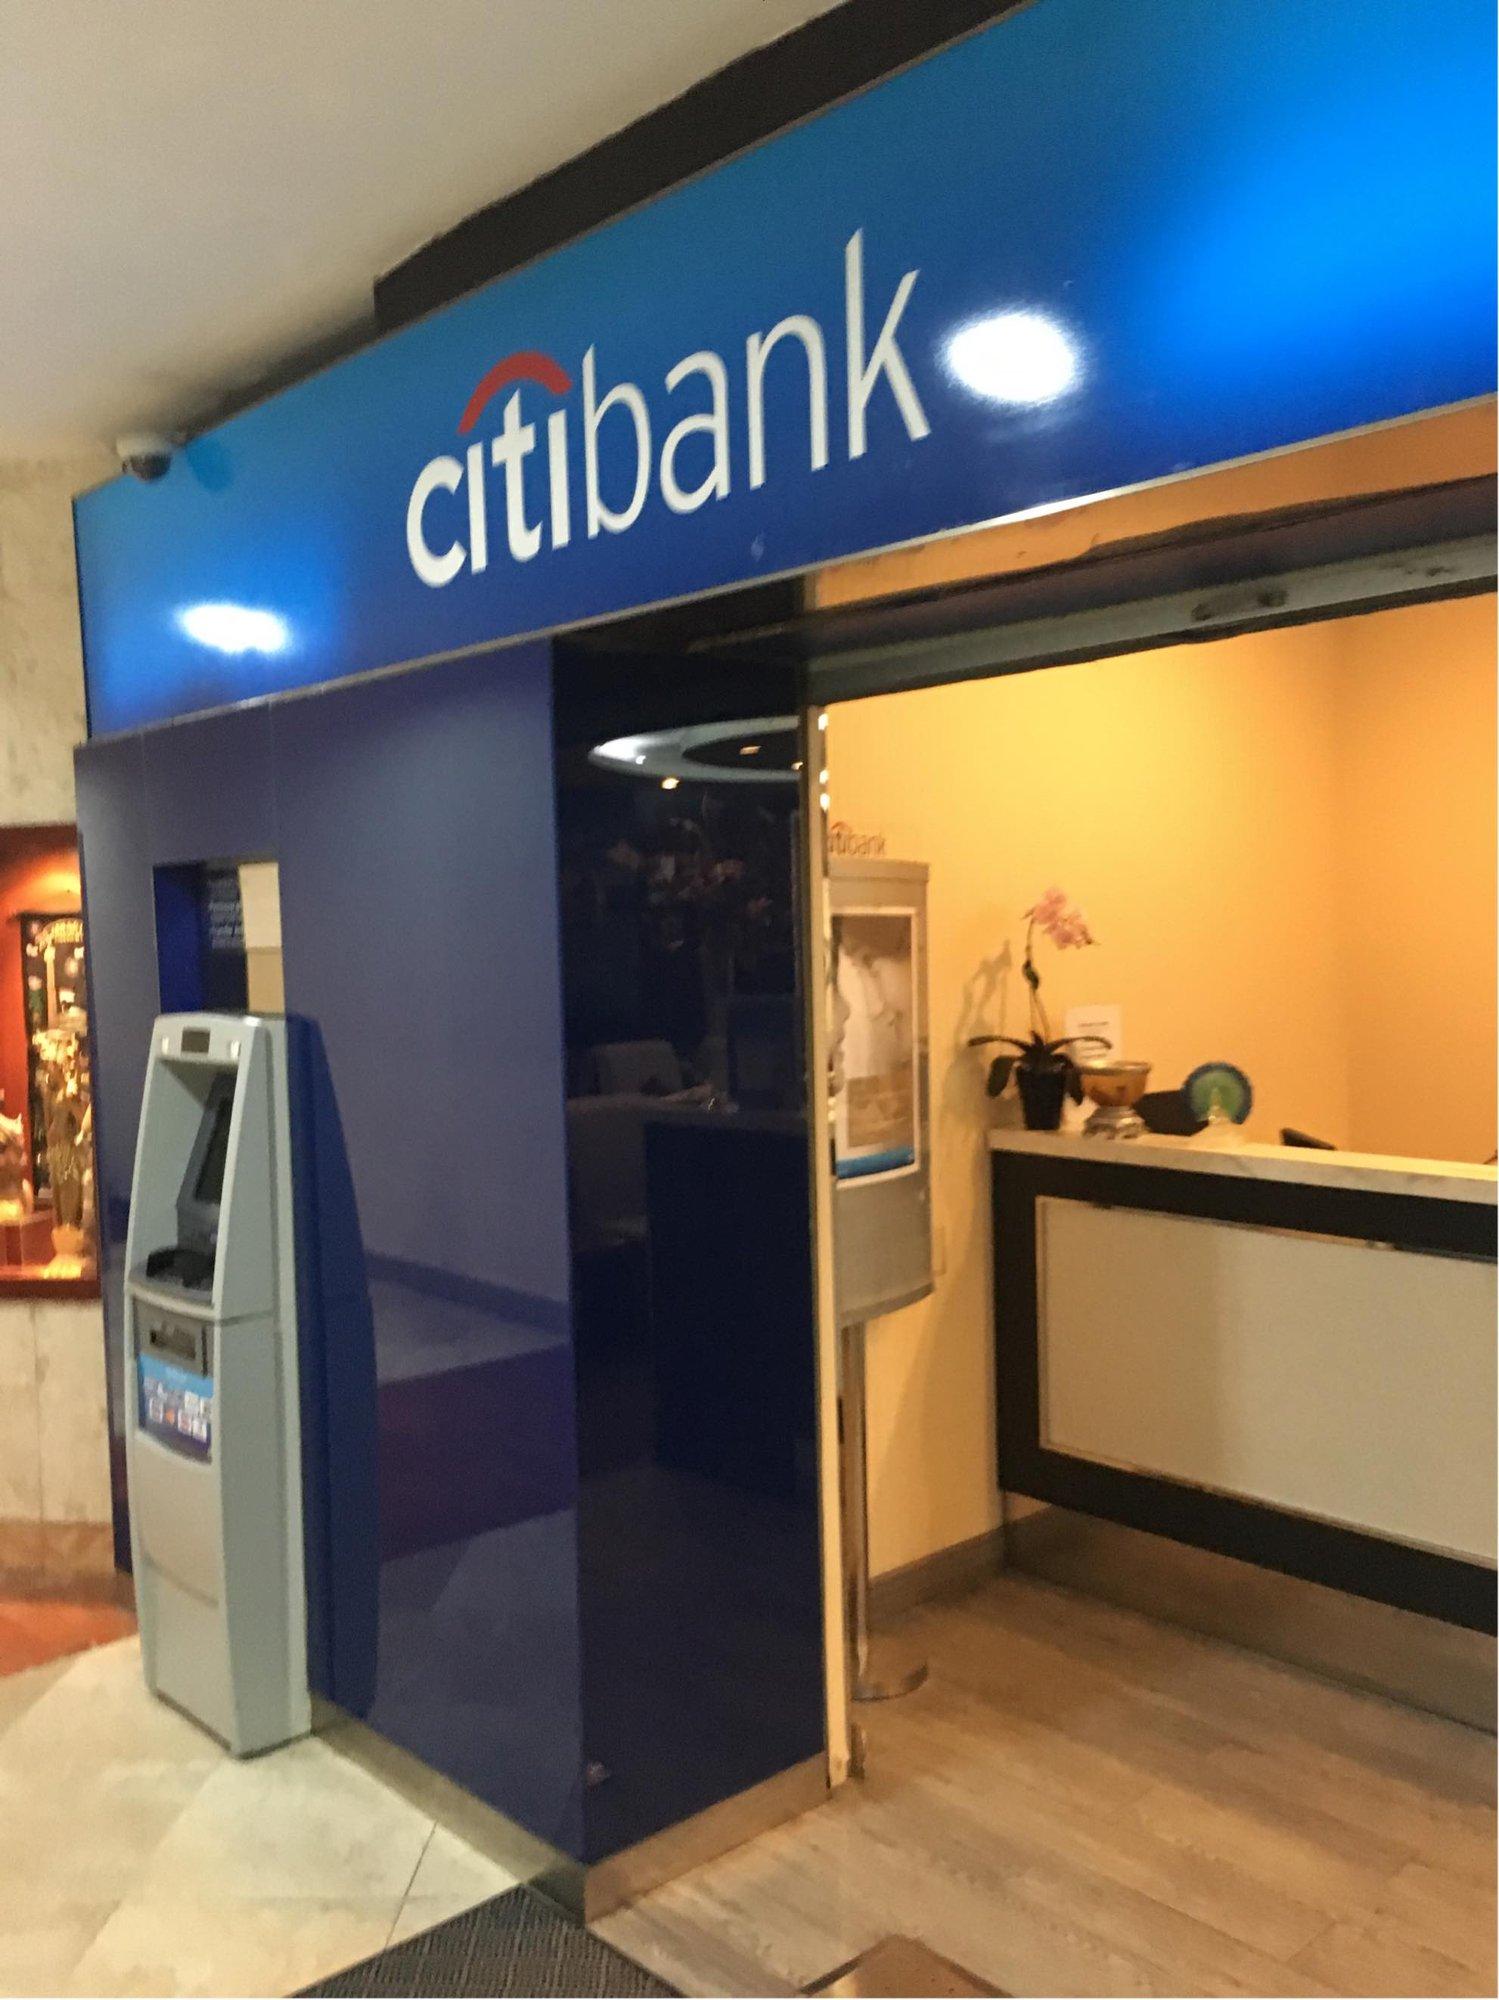 Citibank Lounge image 4 of 4